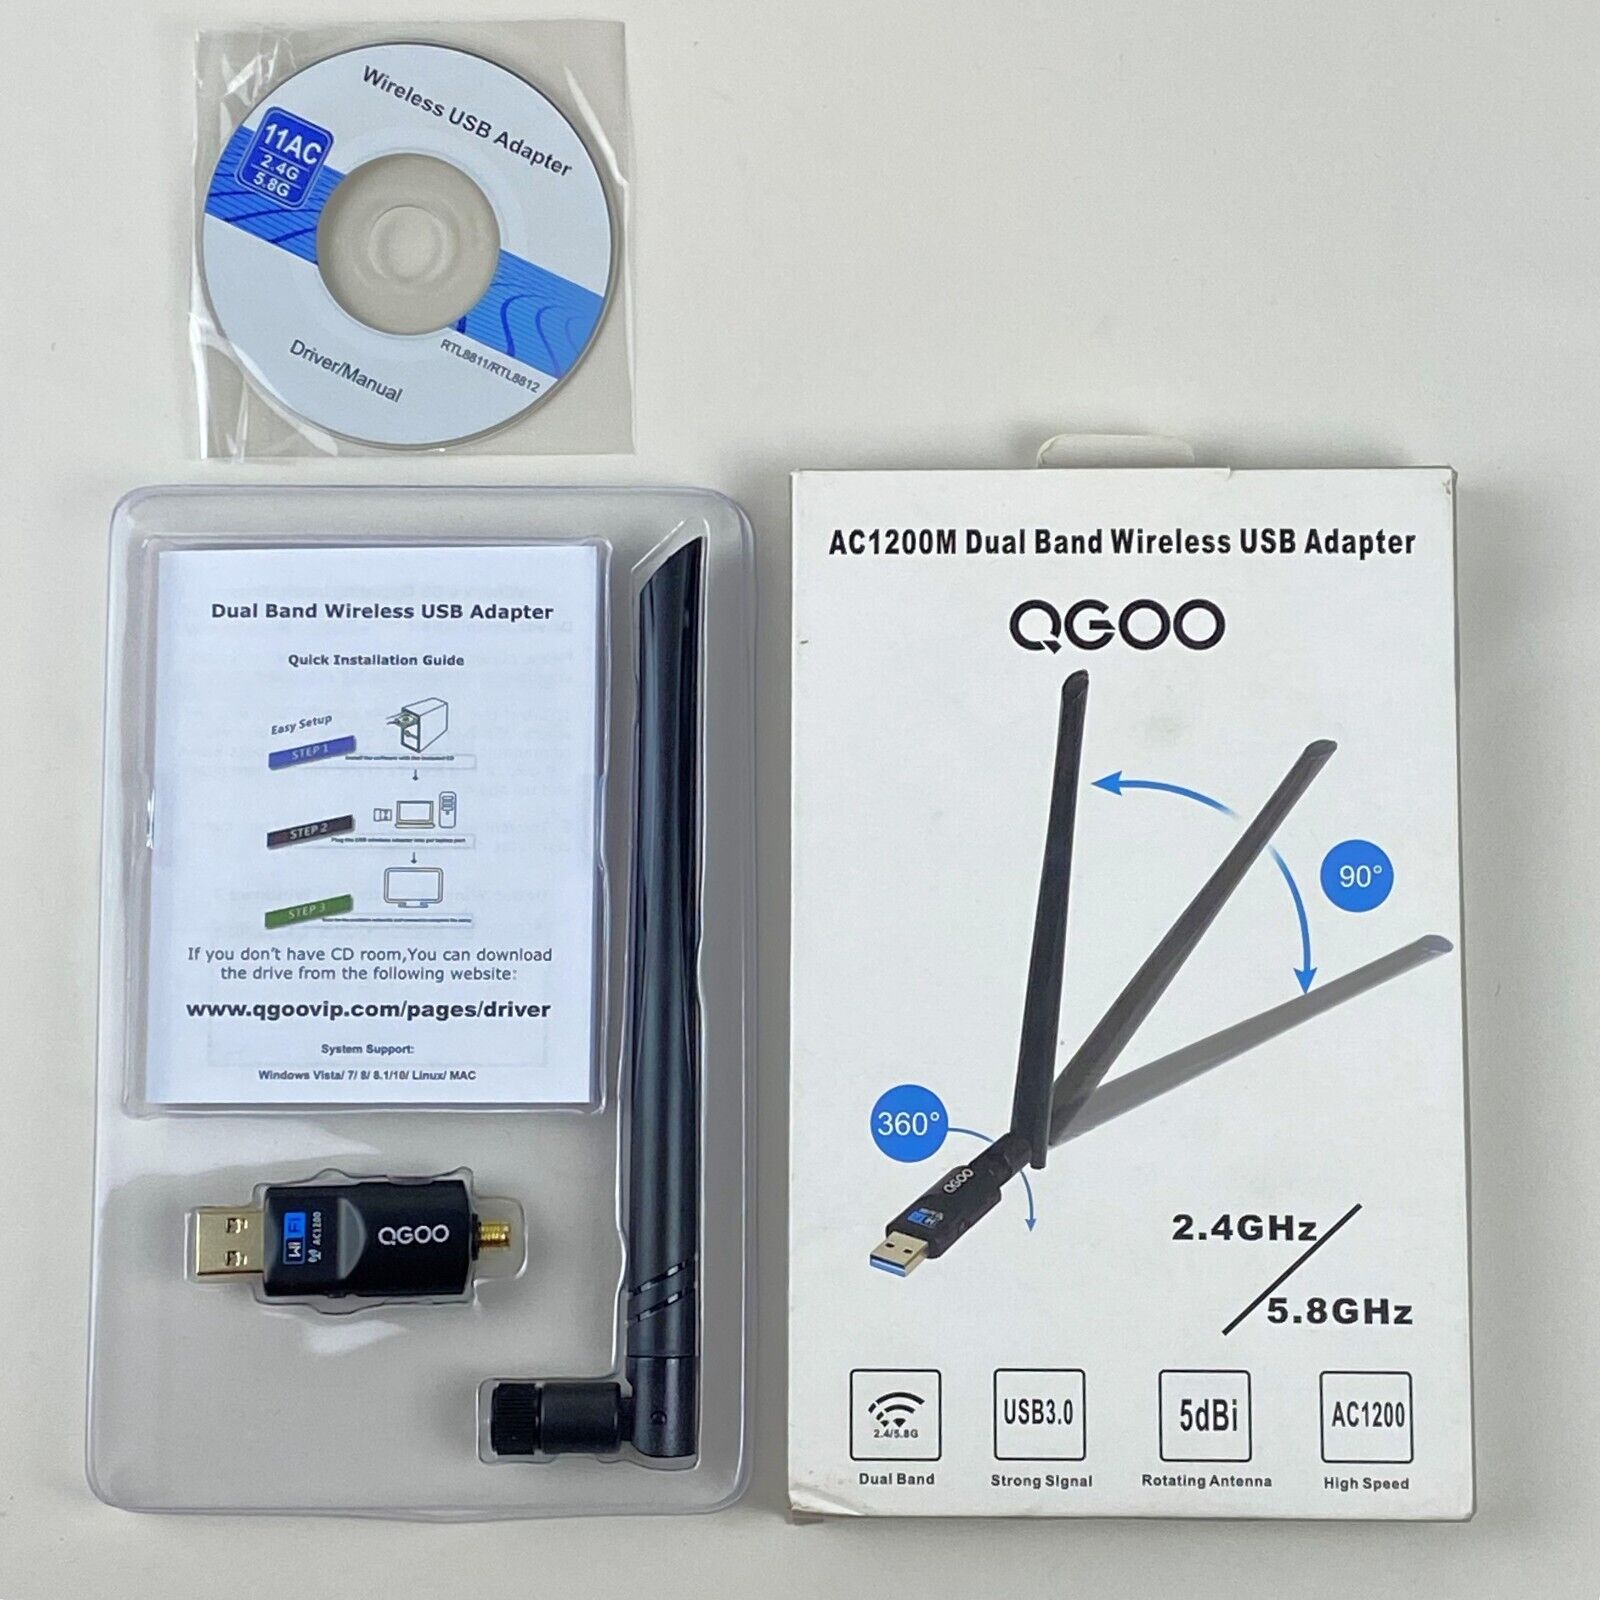 QGOO AC1200M Dual Band WiFi Wireless USB Adapter